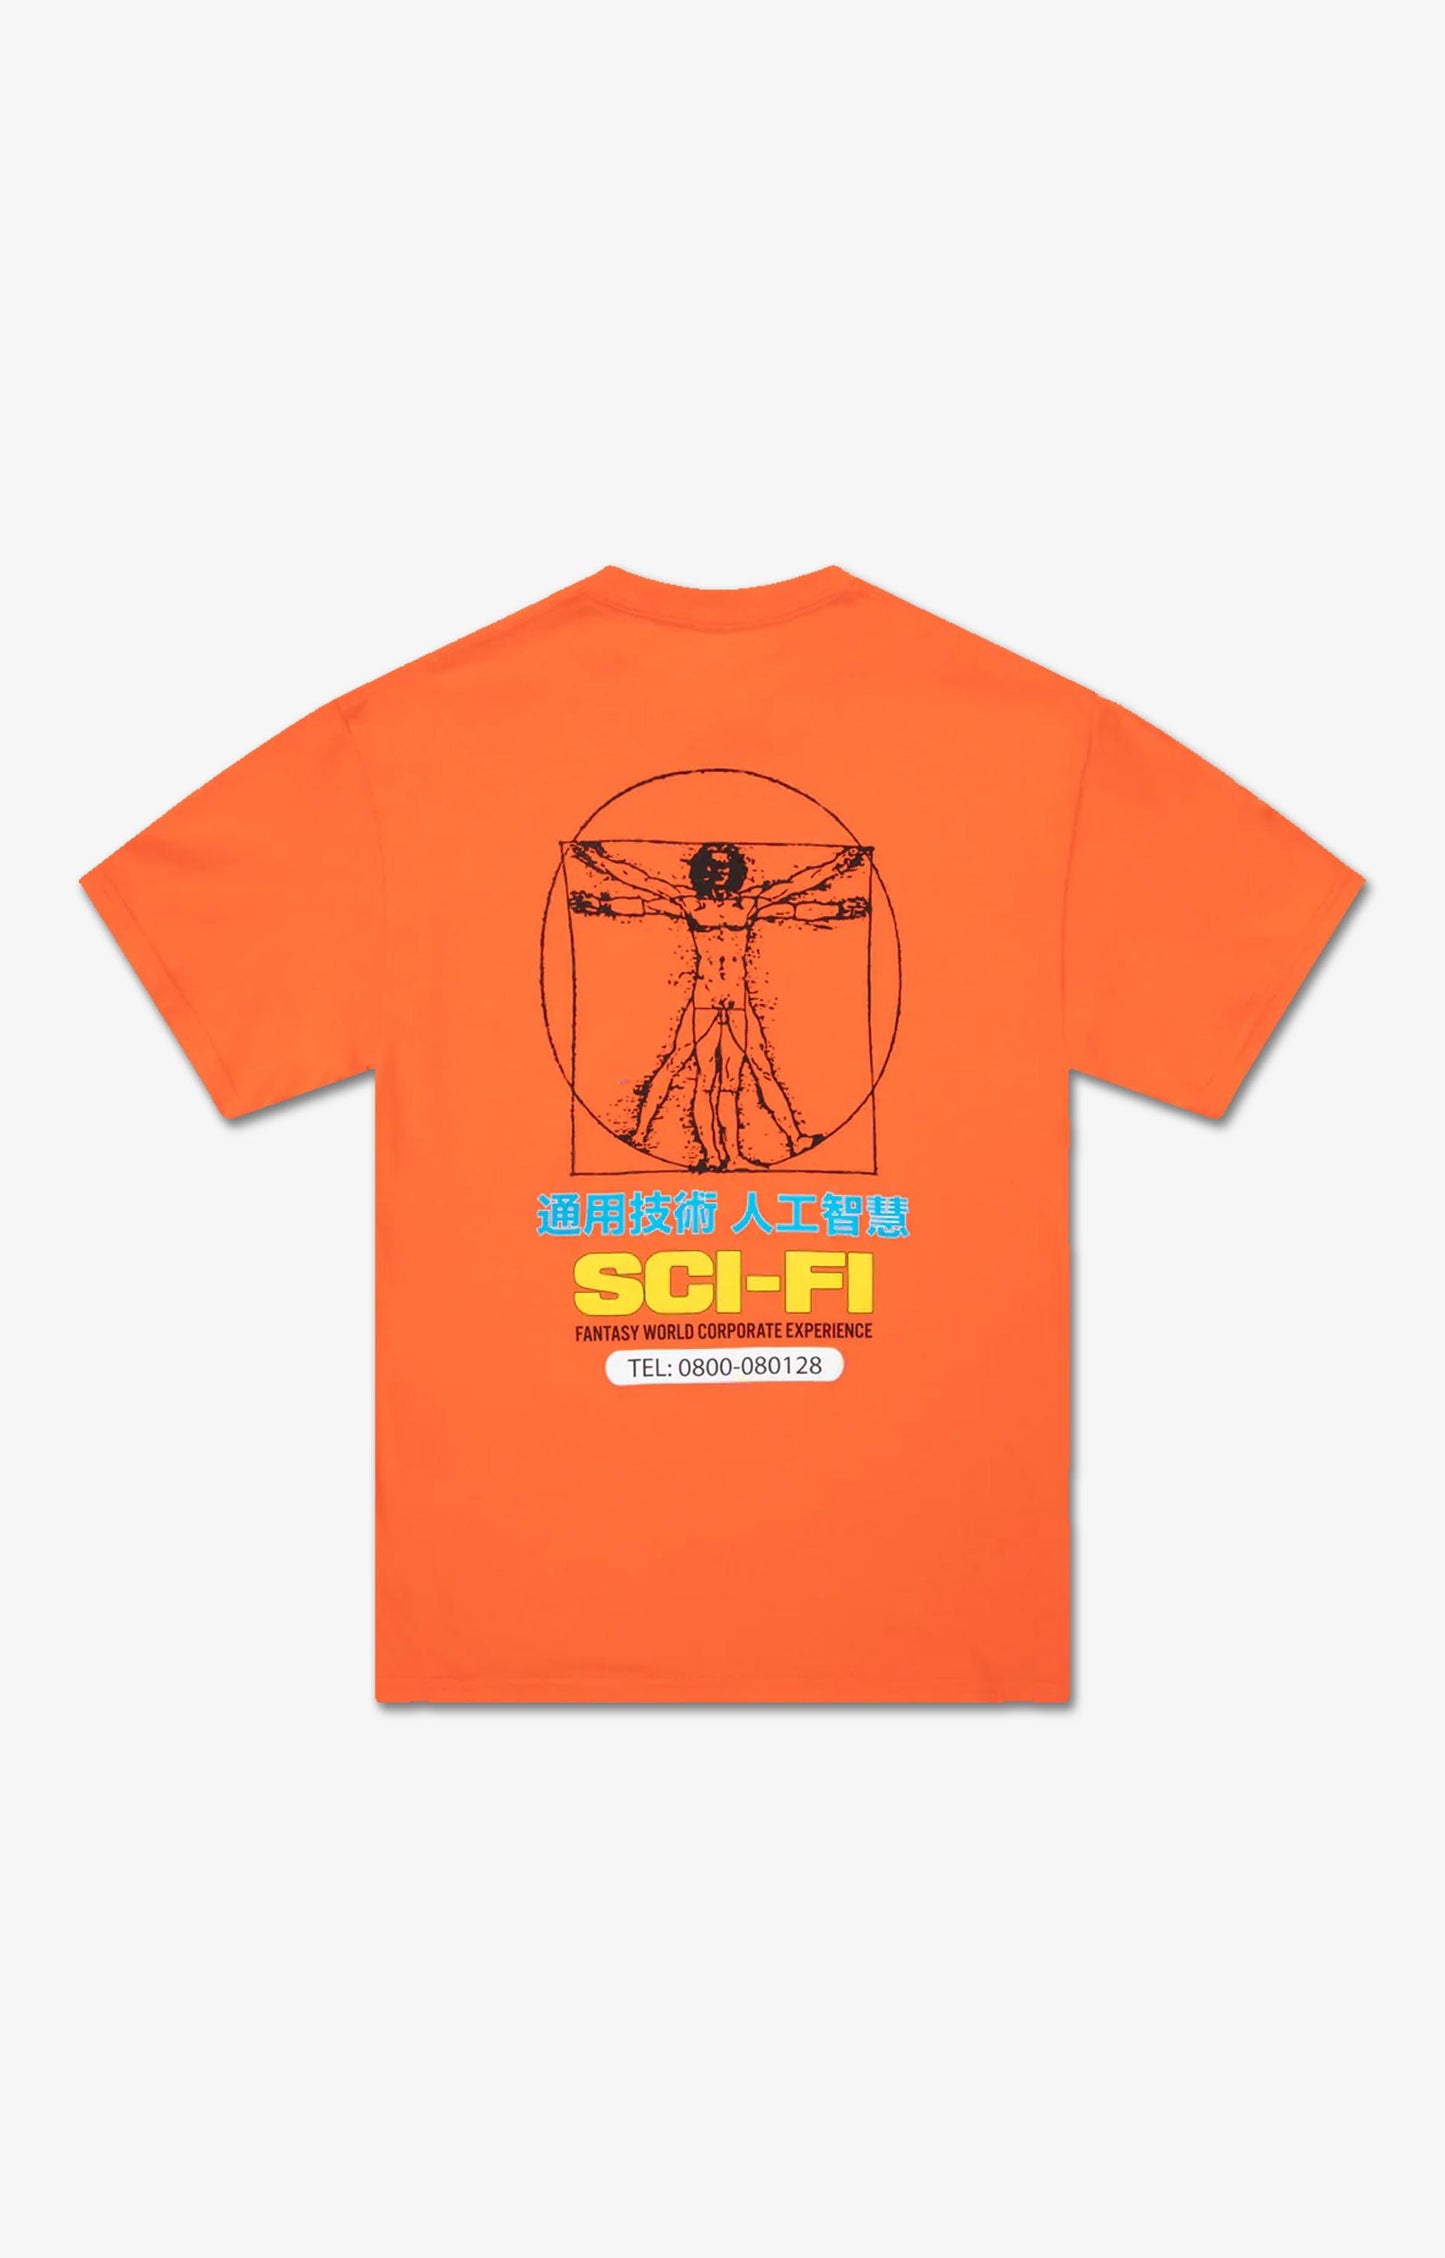 Sci-Fi Fantasy Chain of Being 2 T-Shirt, Orange